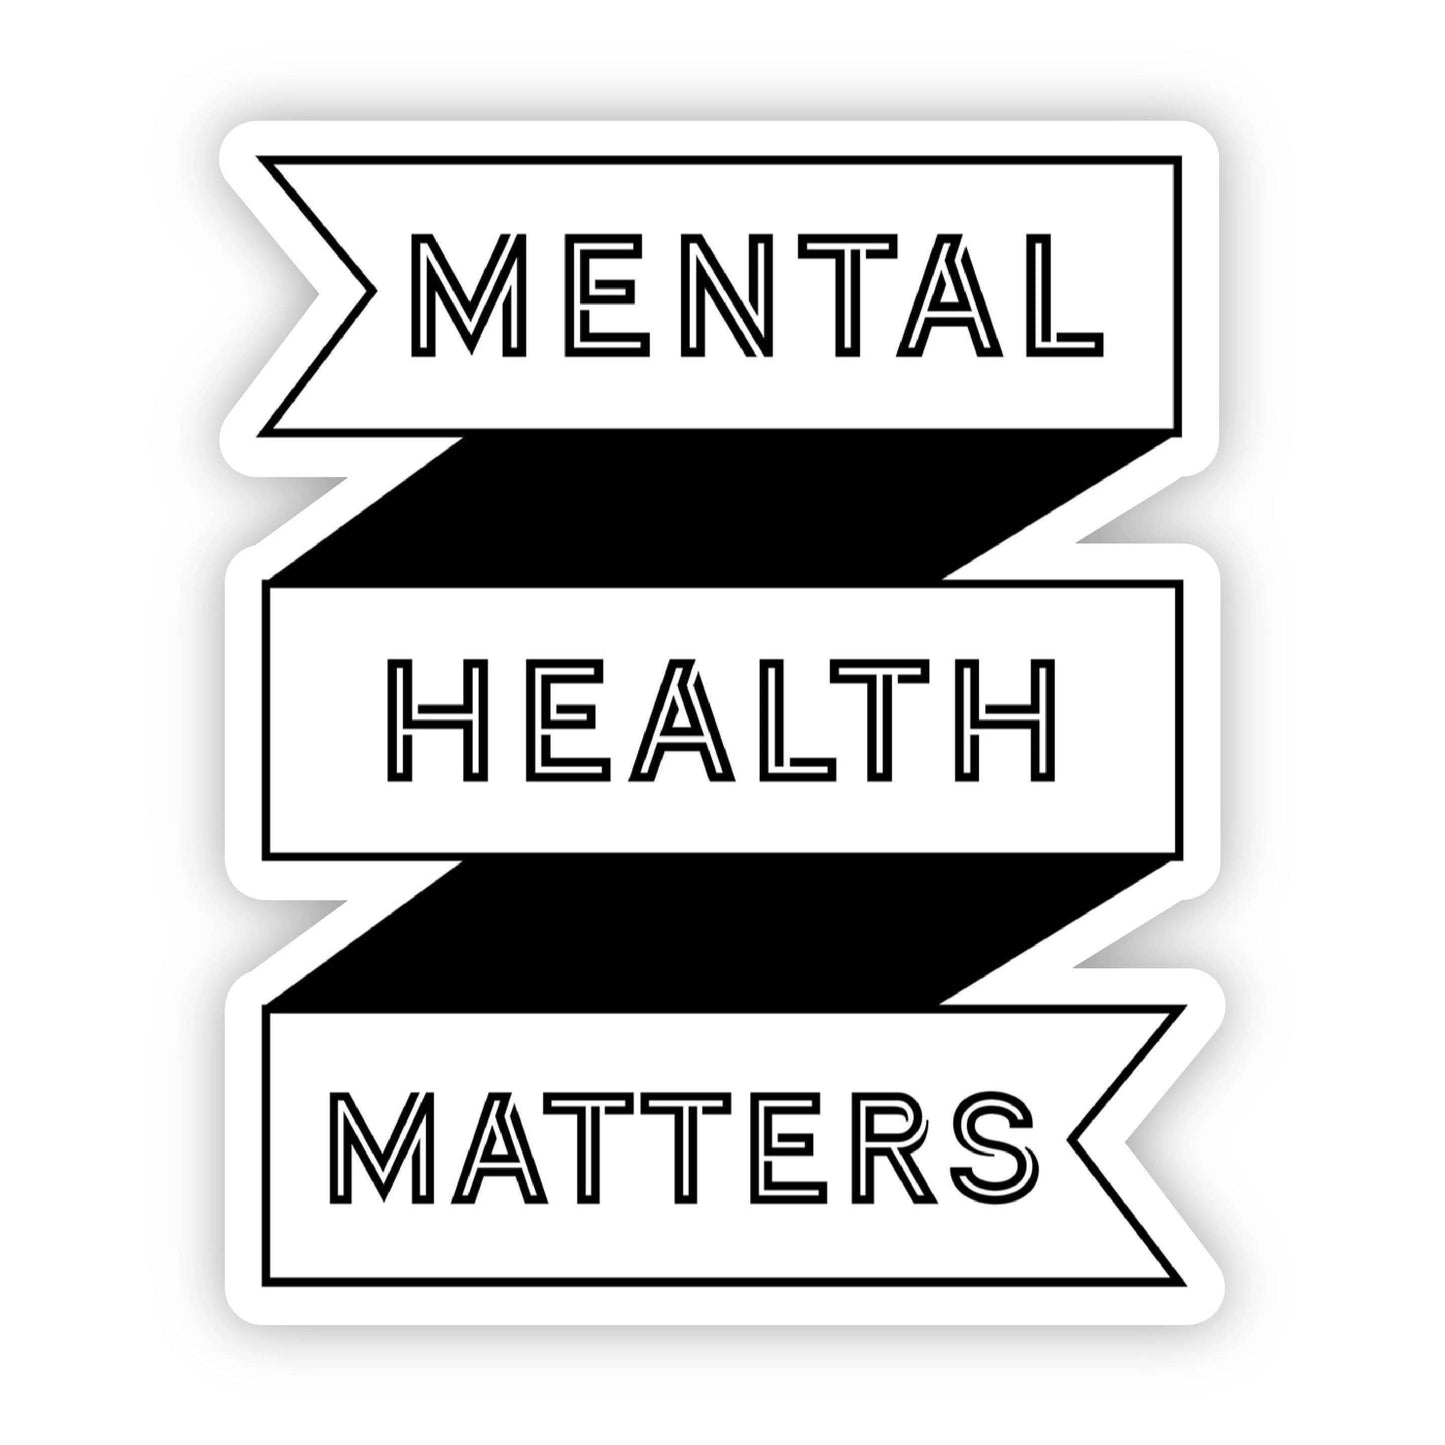 Mental Health Matters Black Banner Sticker